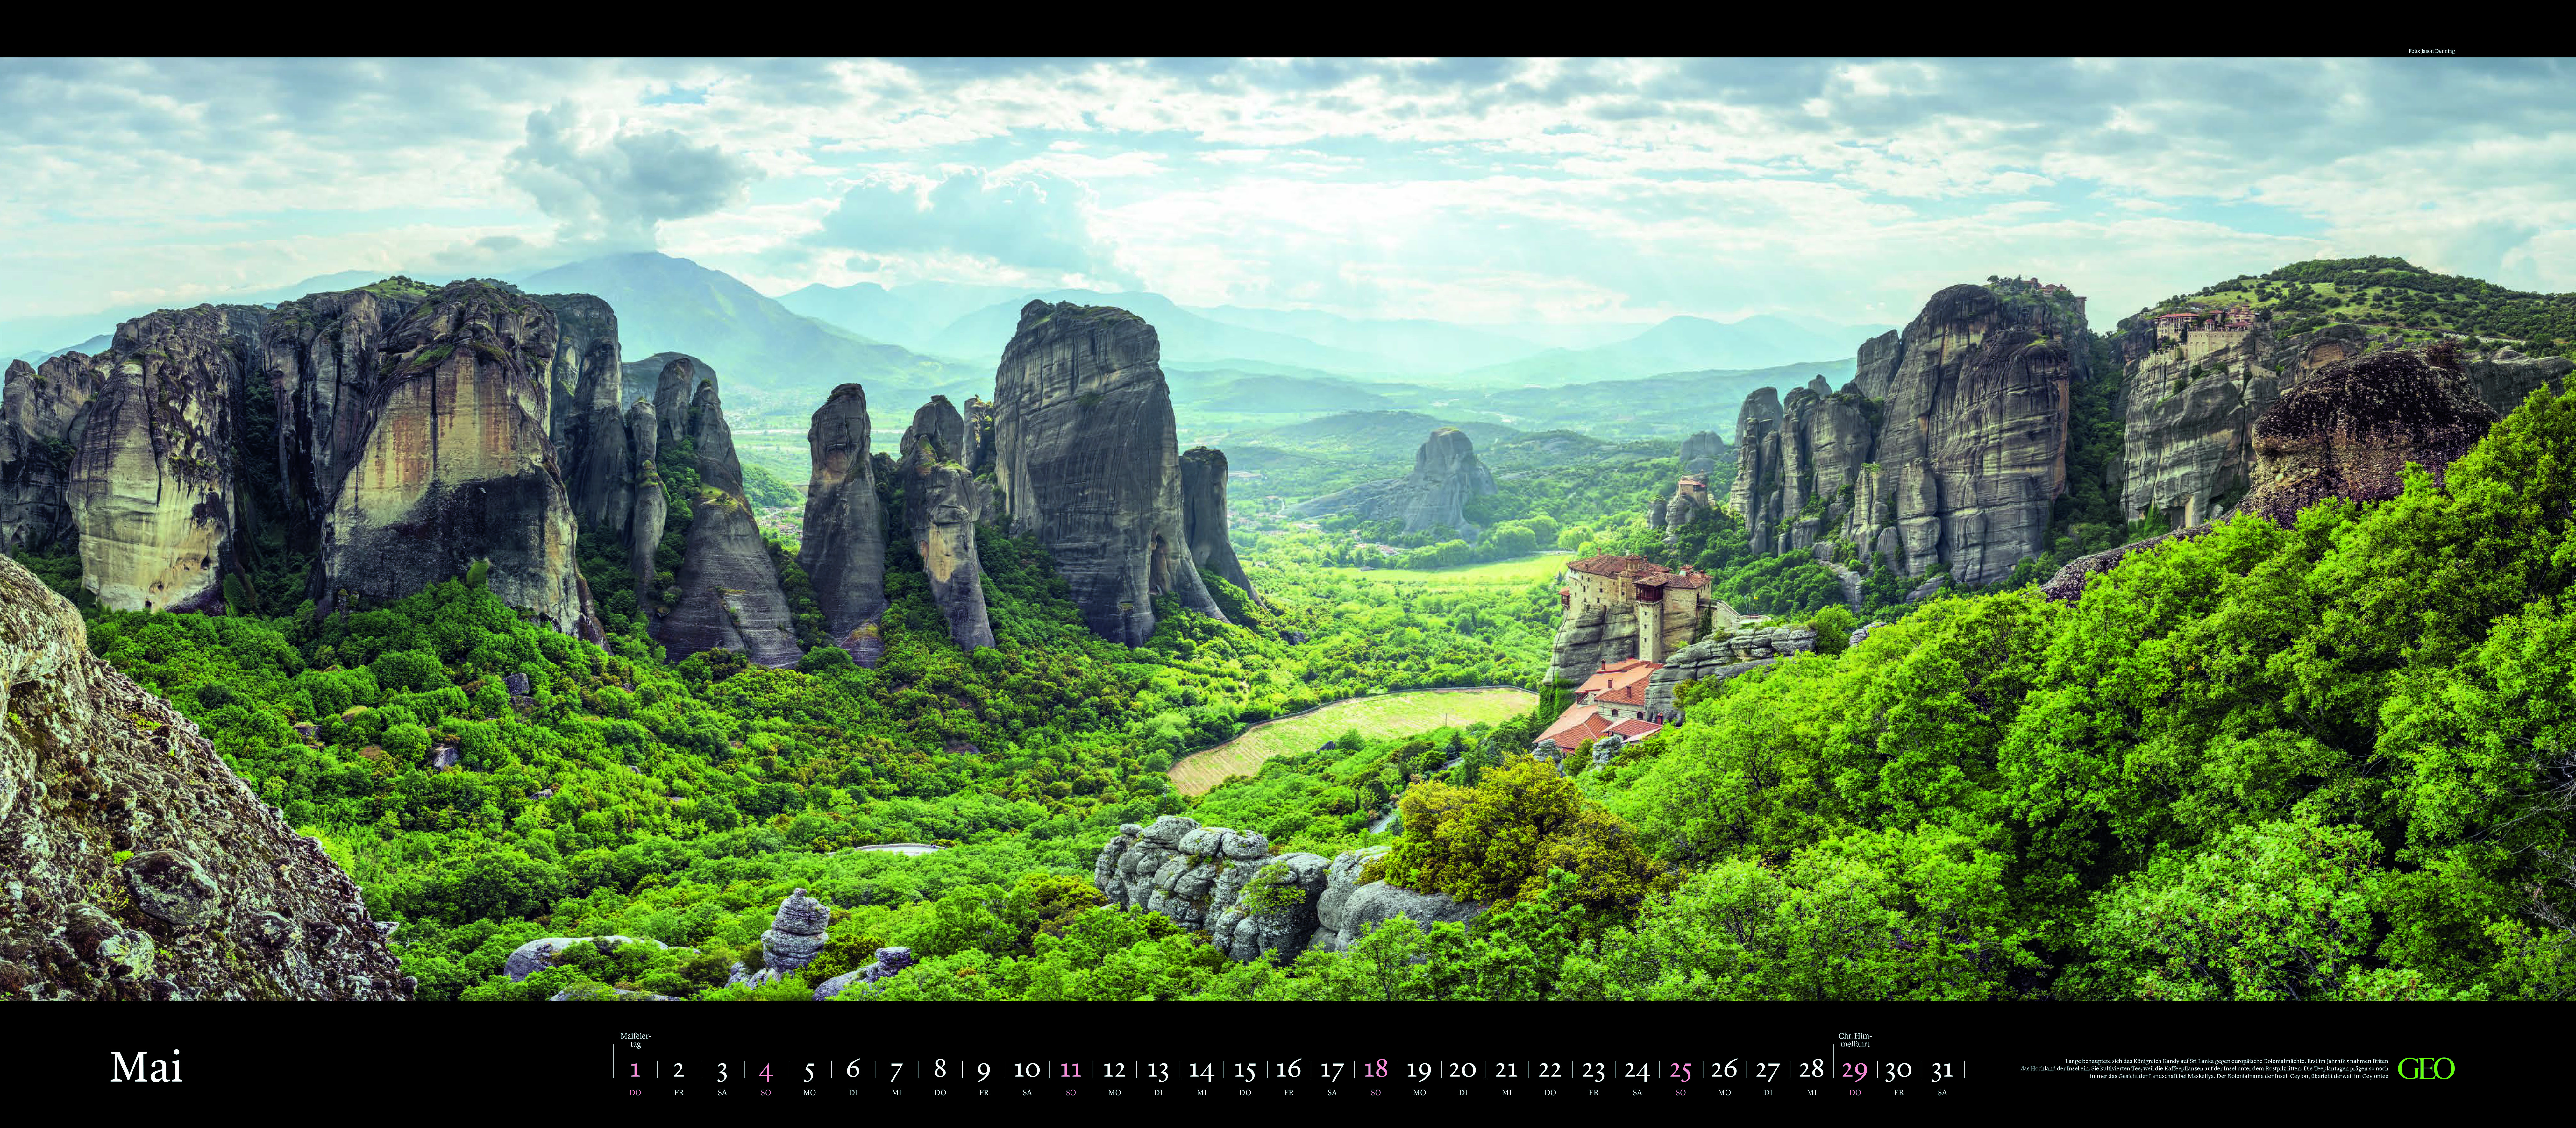 Panorama-Kalender "Der Blick ins Weite" 2025